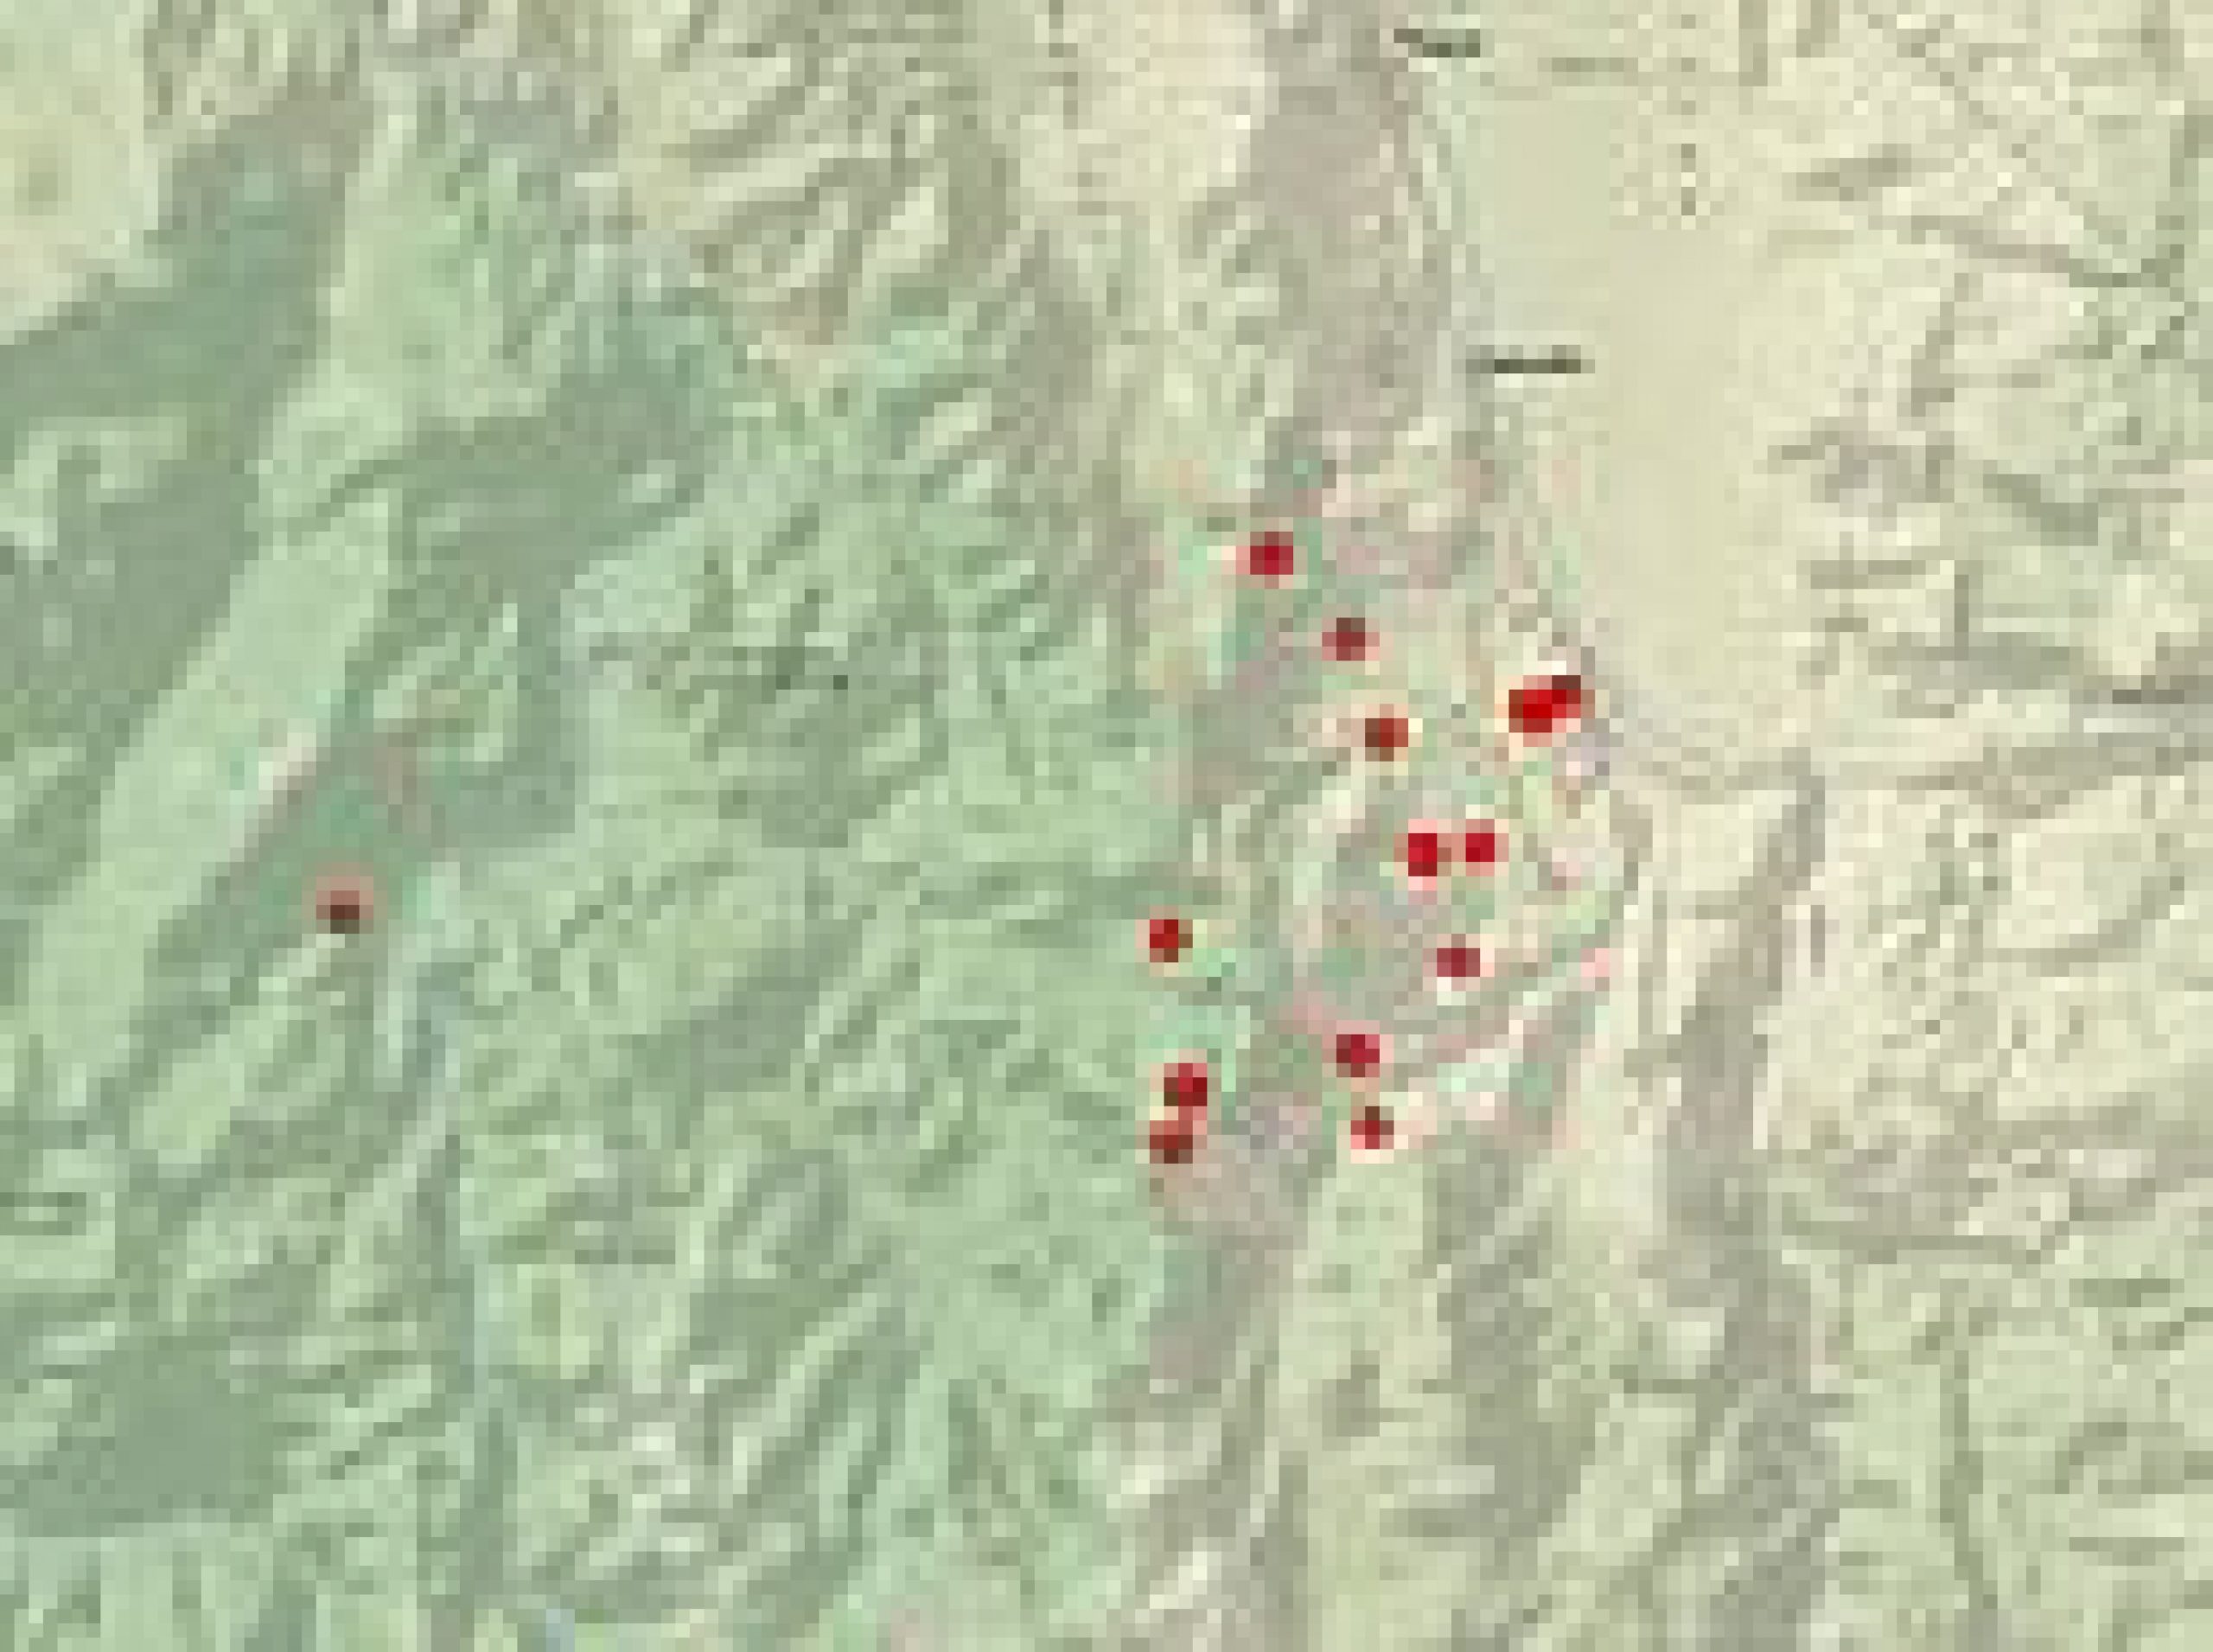 Multiple earthquakes including magnitude 5.9 earthquake felt across northern California and Nevada